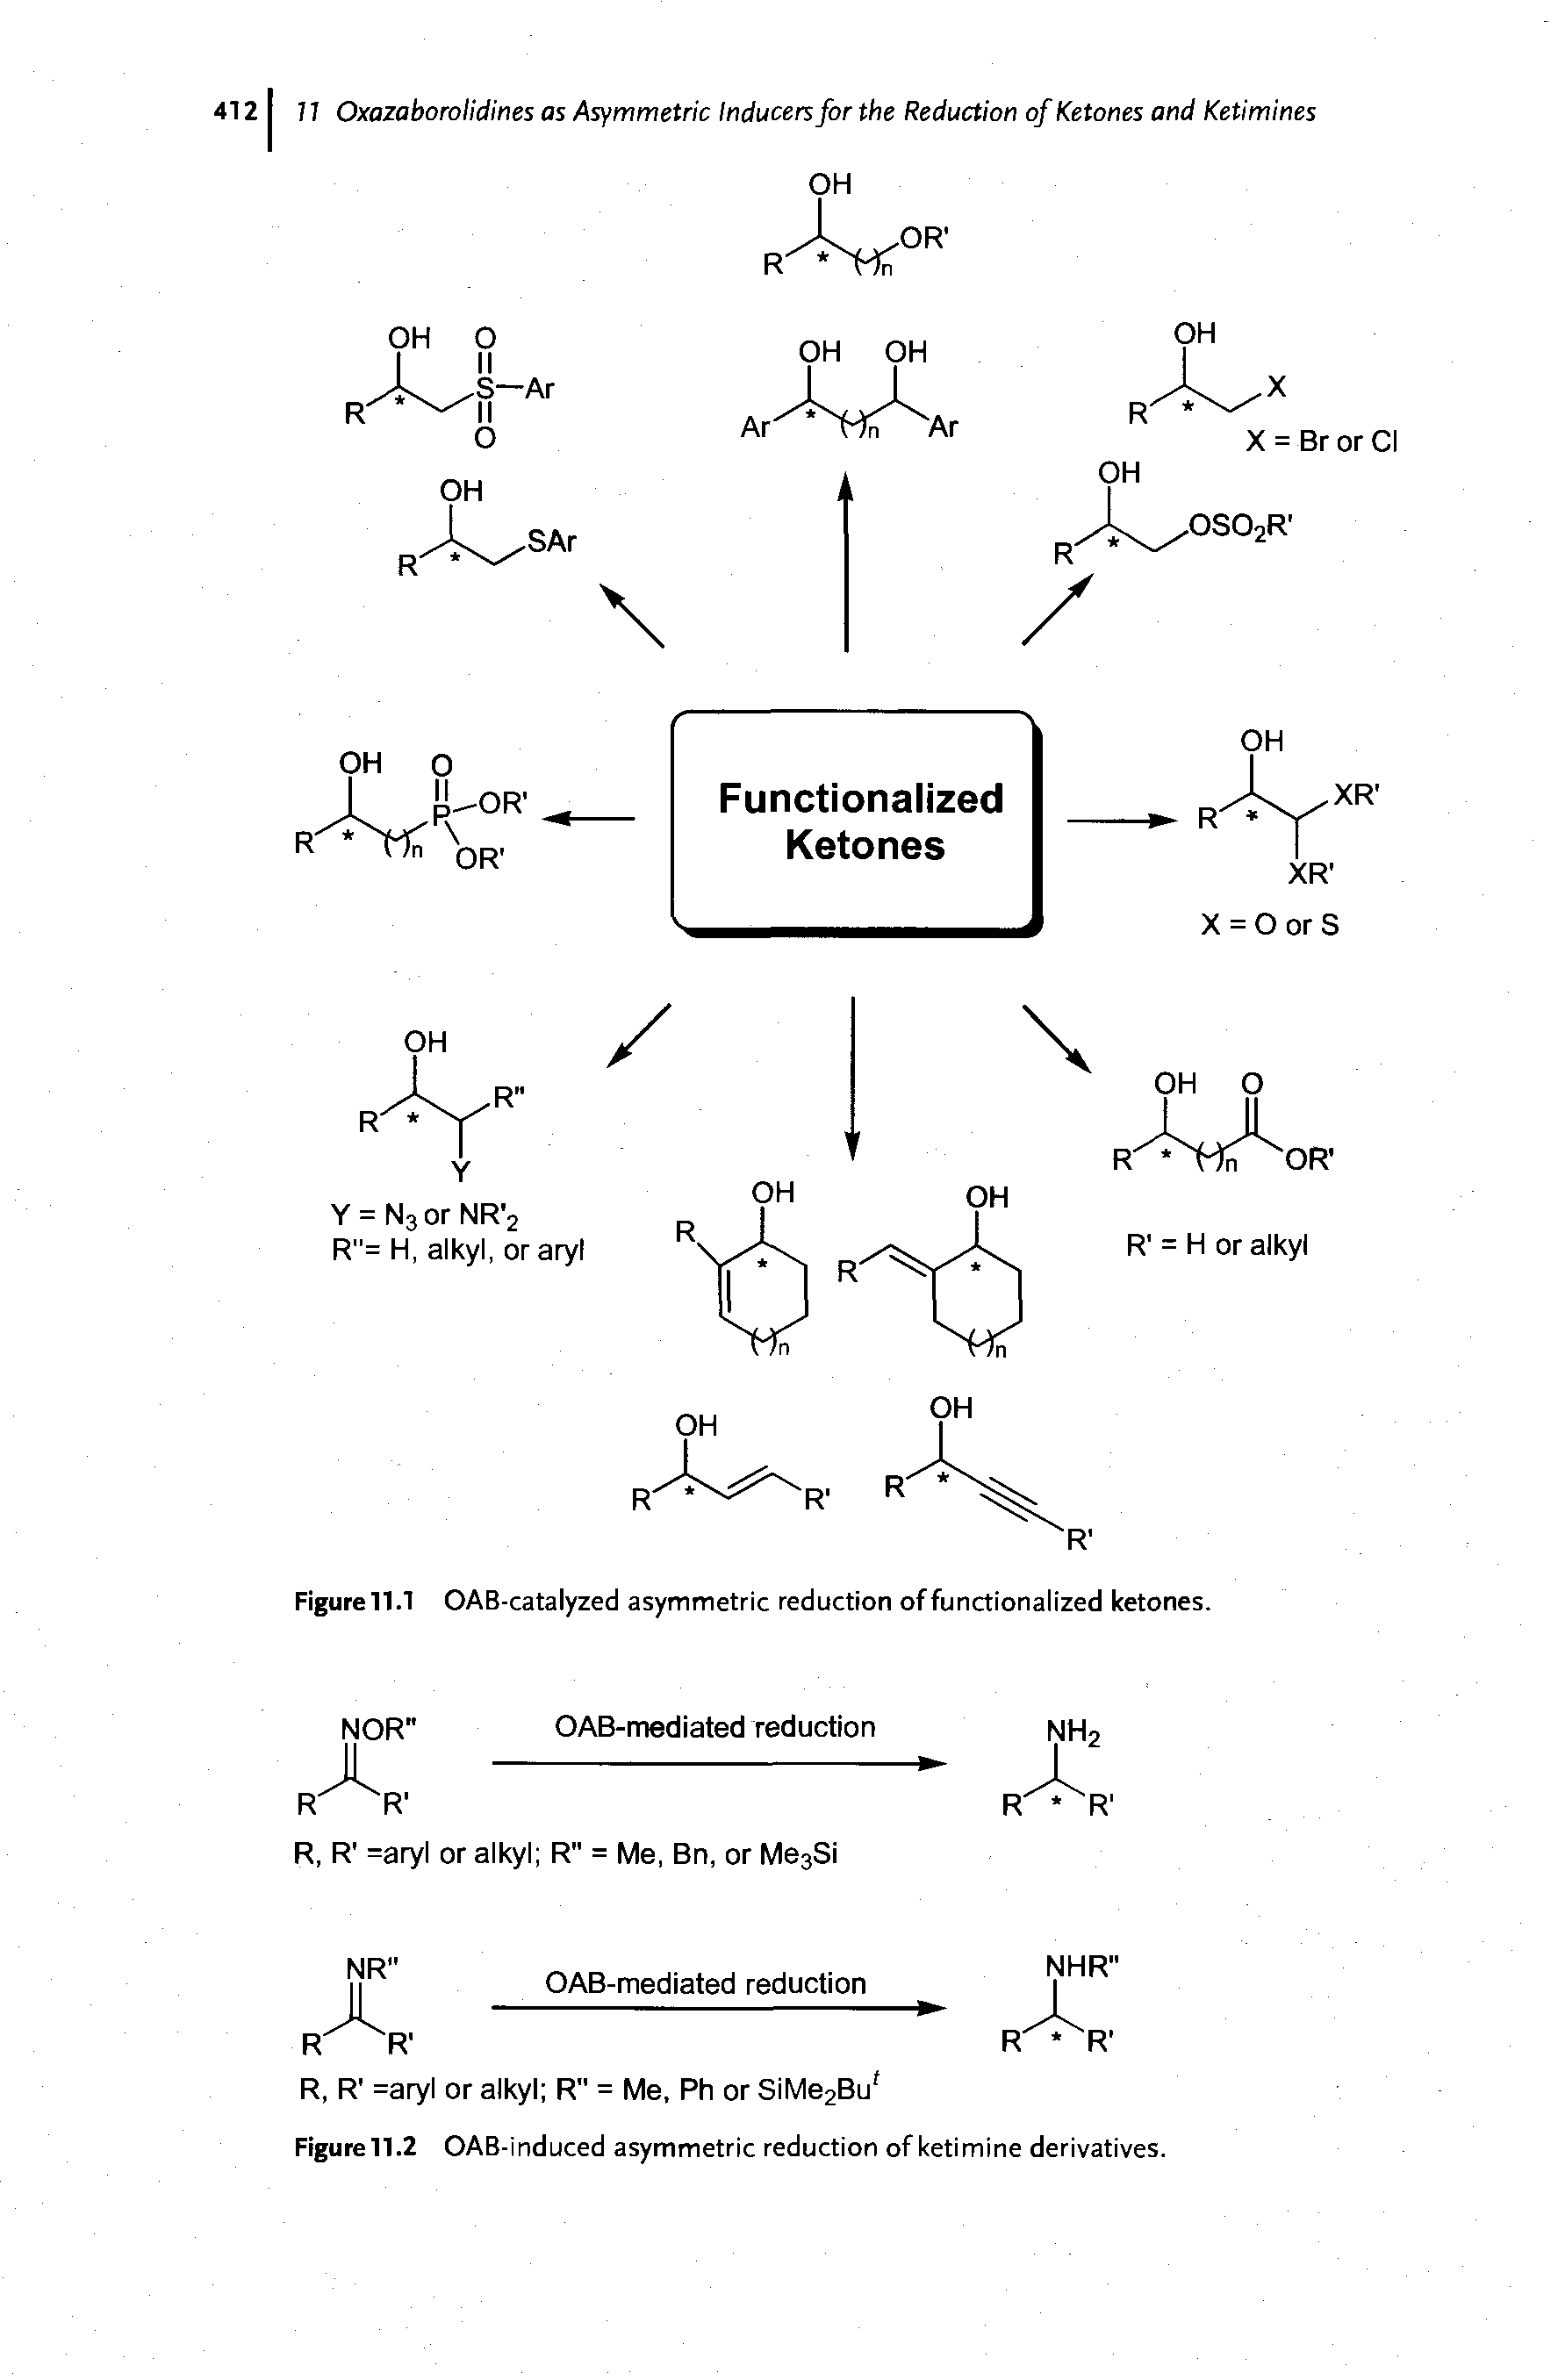 Figure11.2 OAB-induced asymmetric reduction of ketimine derivatives.